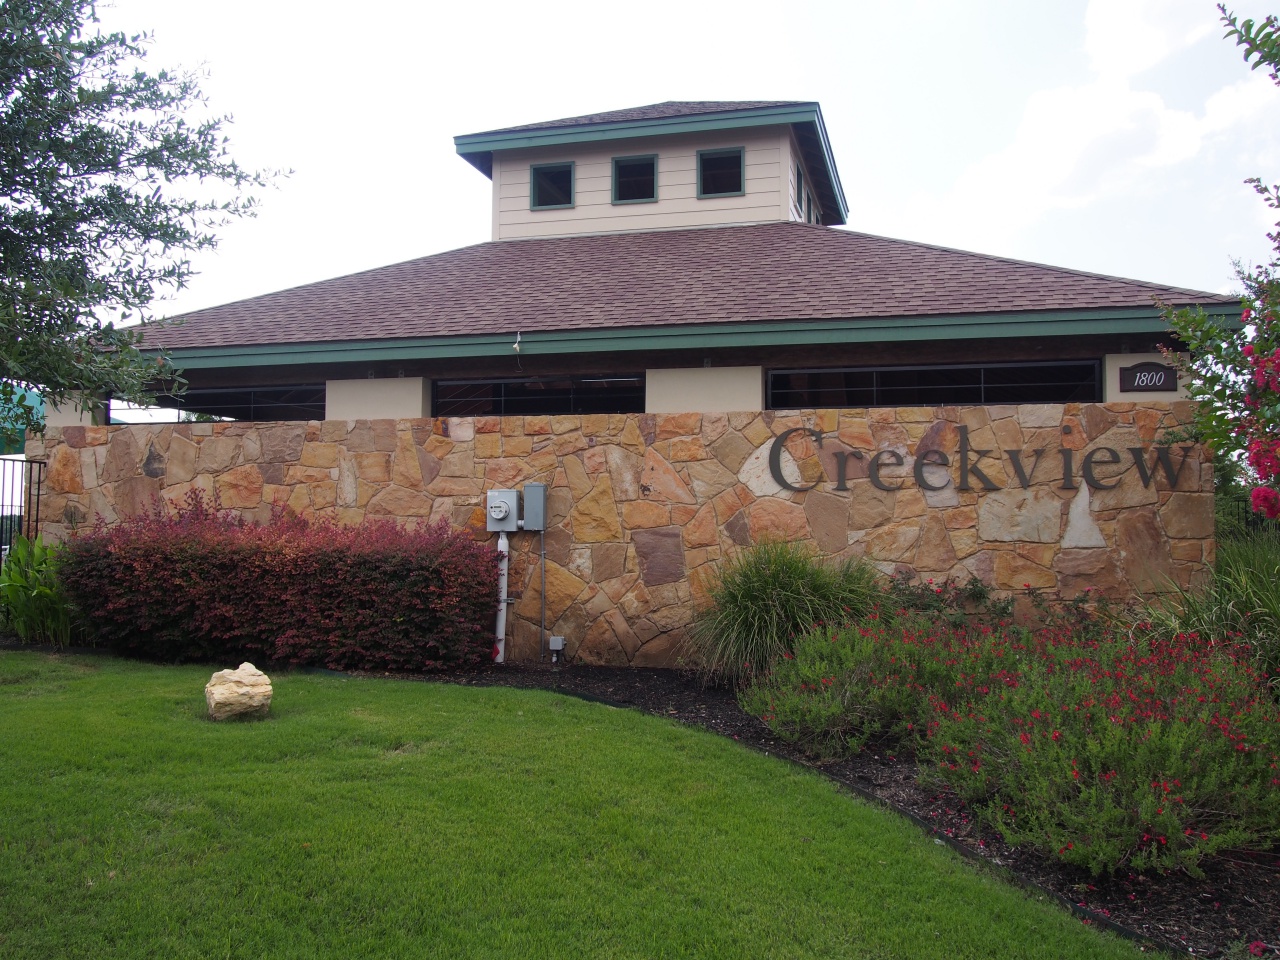 creekview cedar park neighborhood guide